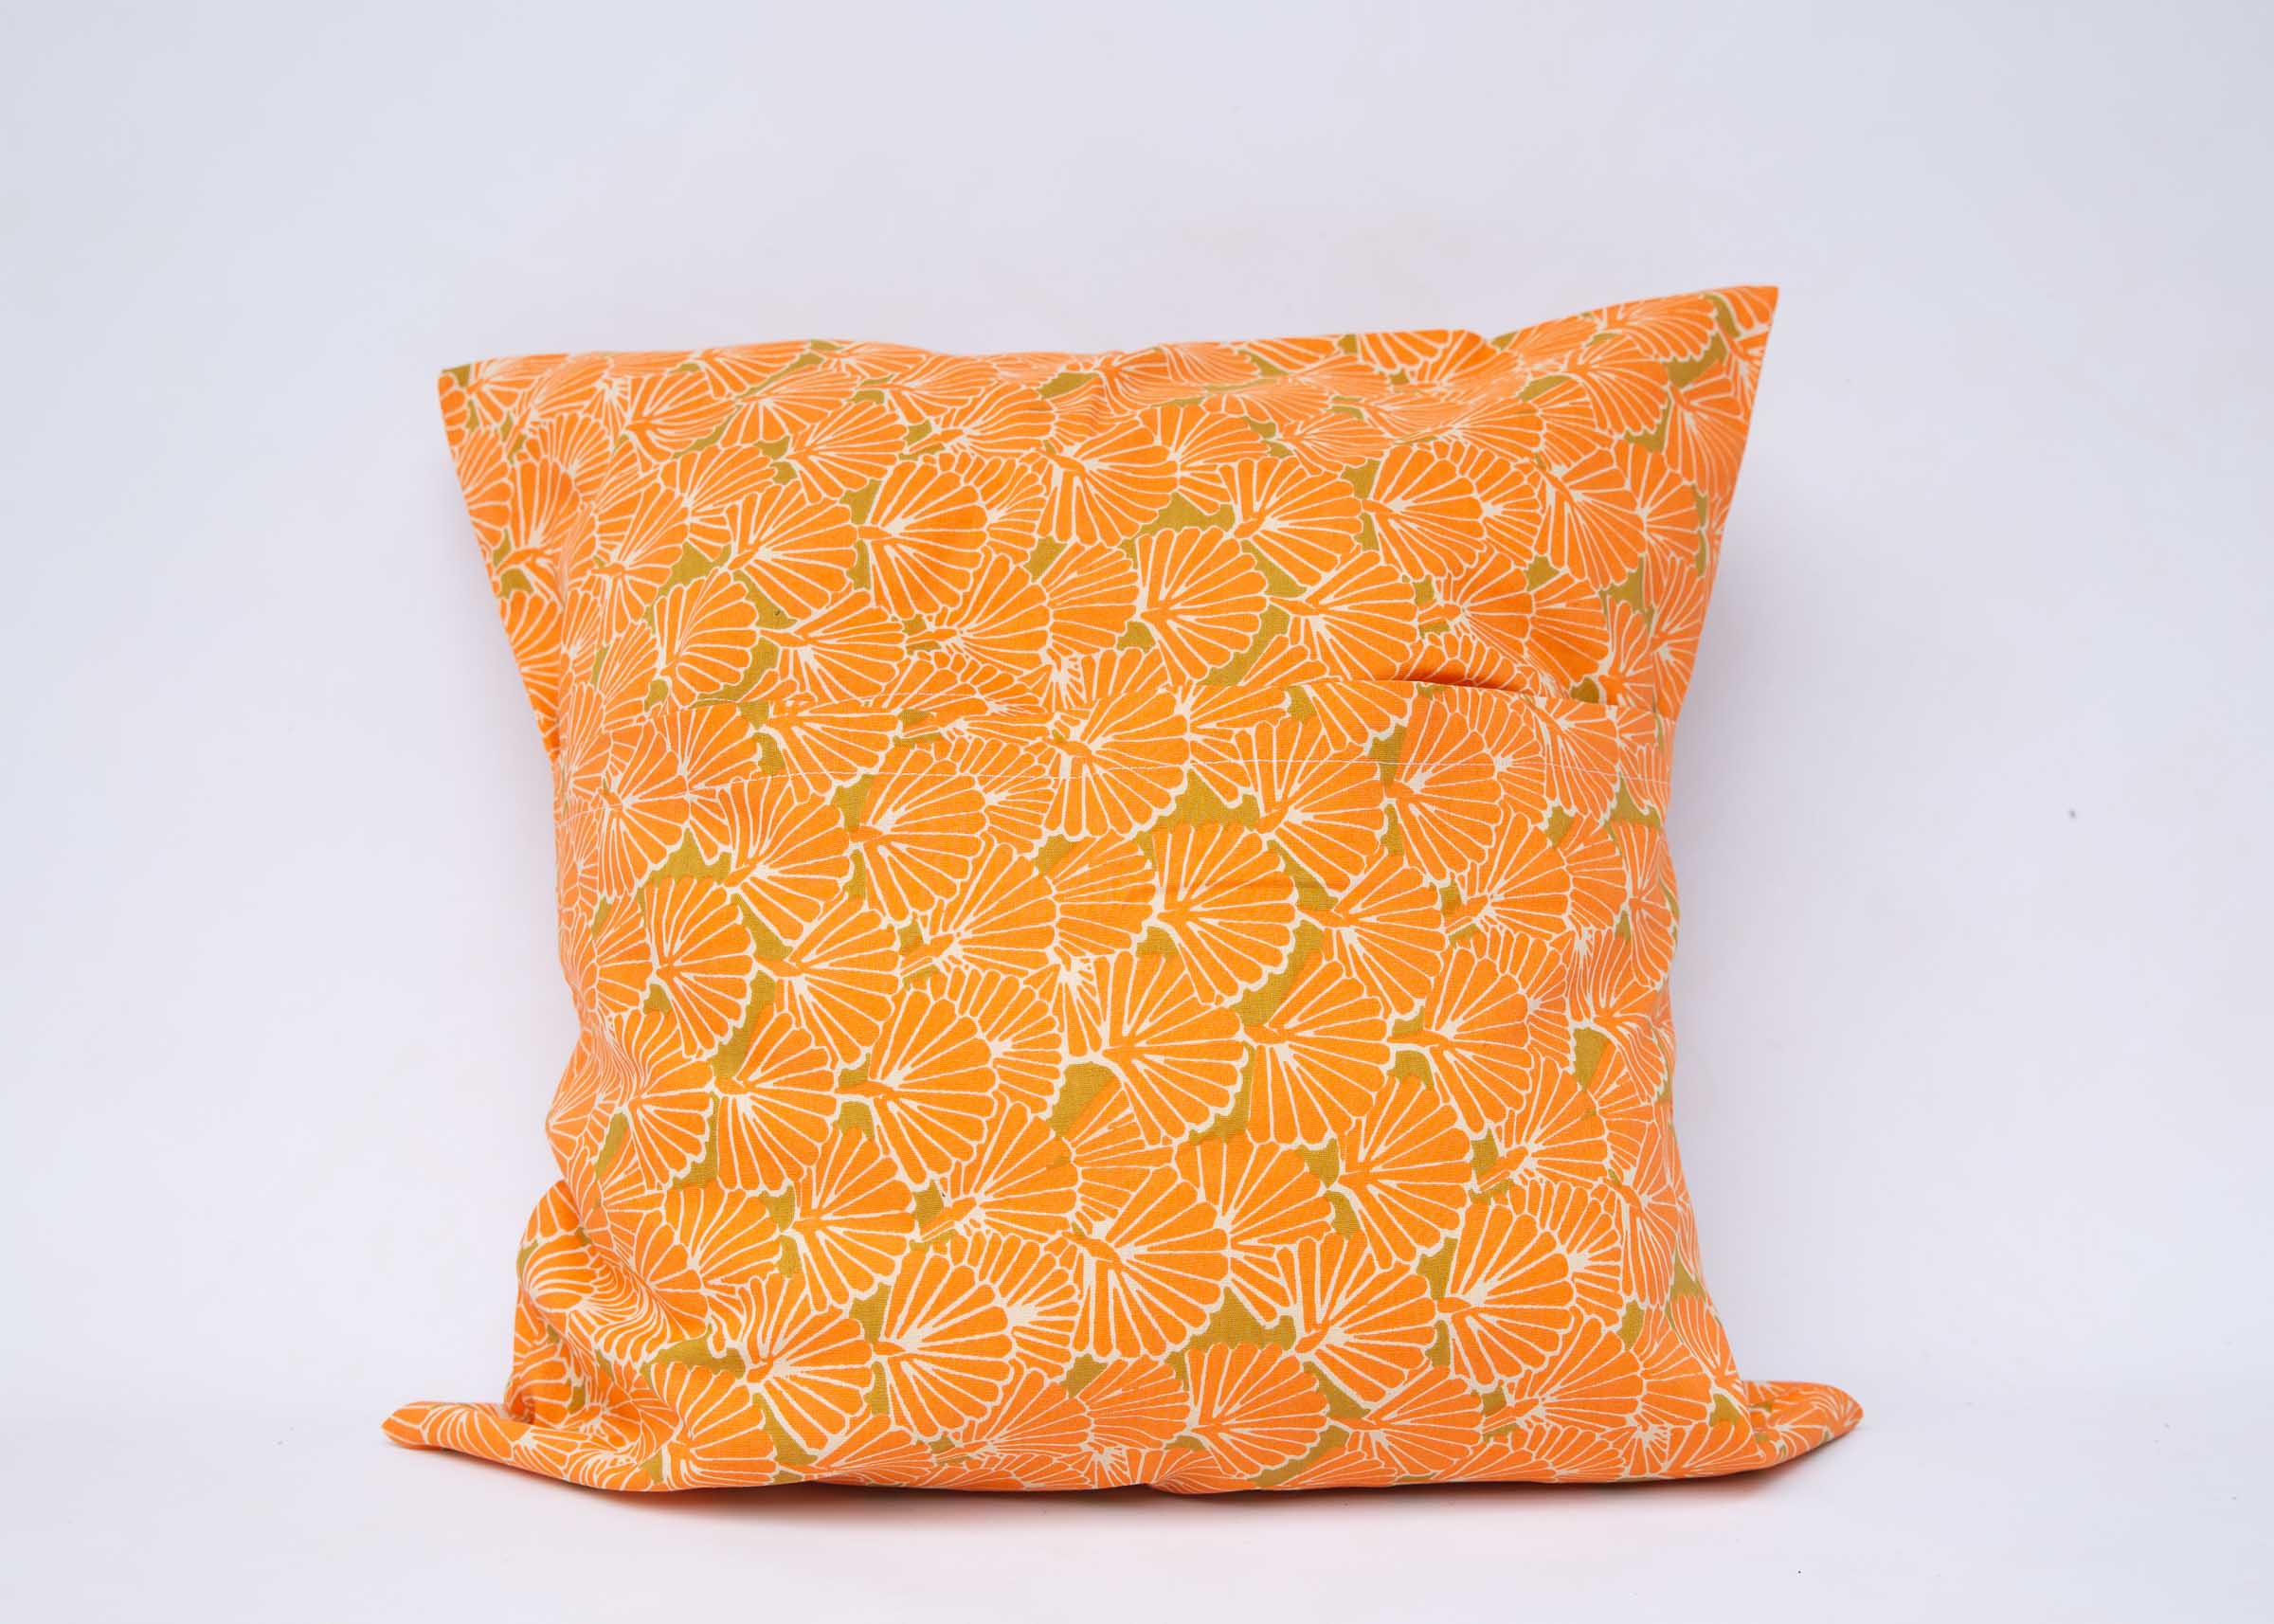 Display of 20x20 orange floral pillow case